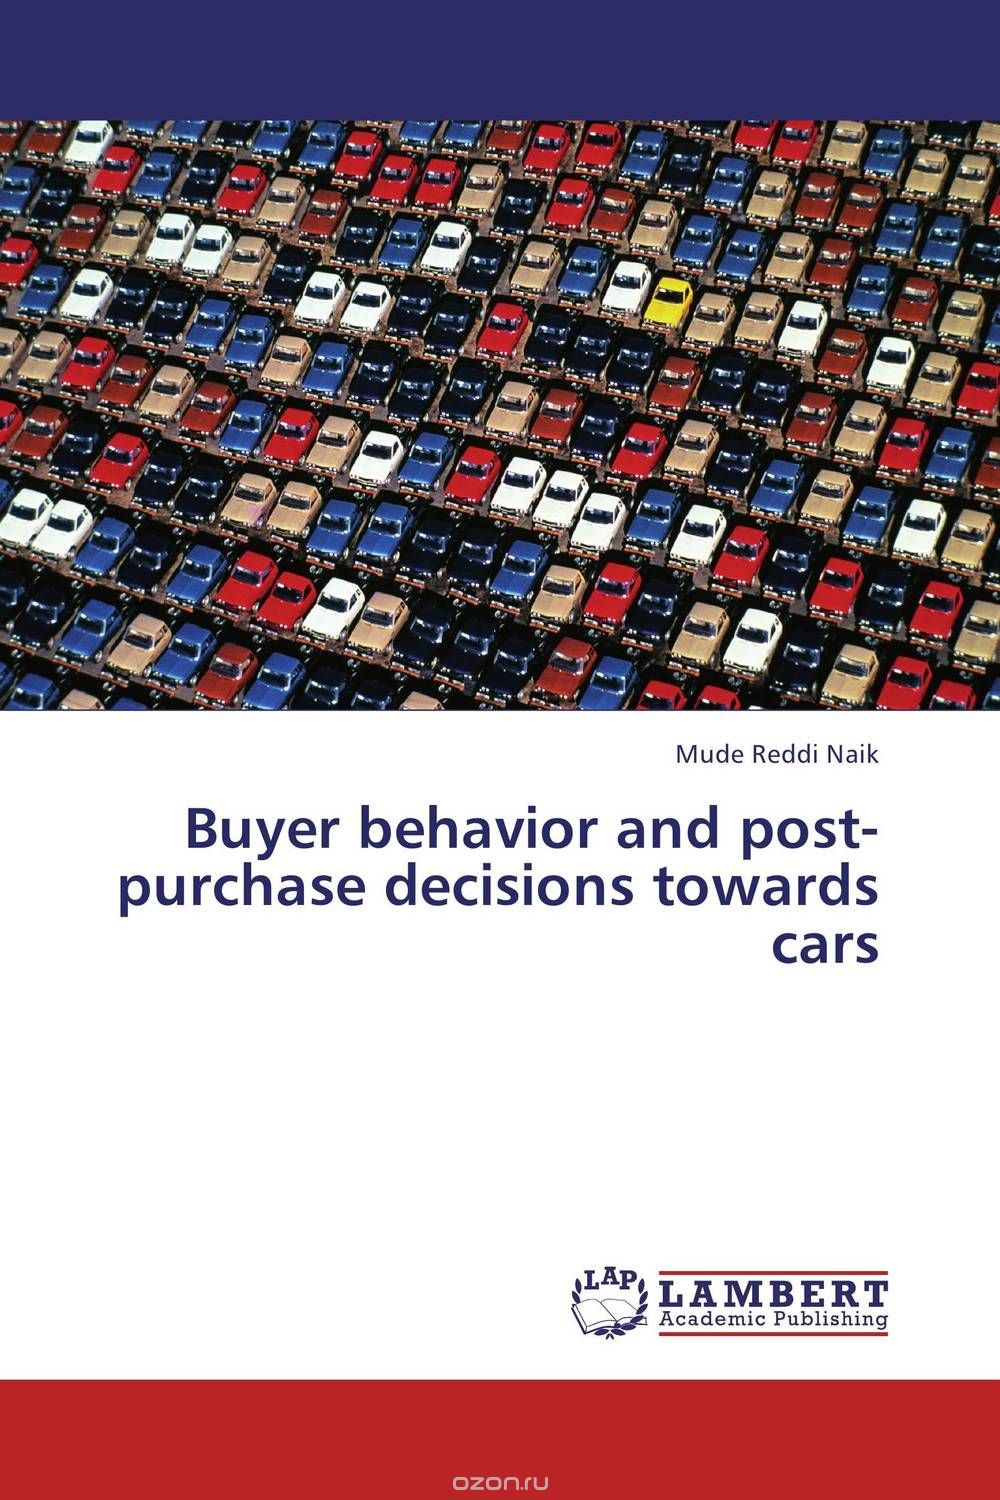 Скачать книгу "Buyer behavior and post-purchase decisions towards cars"